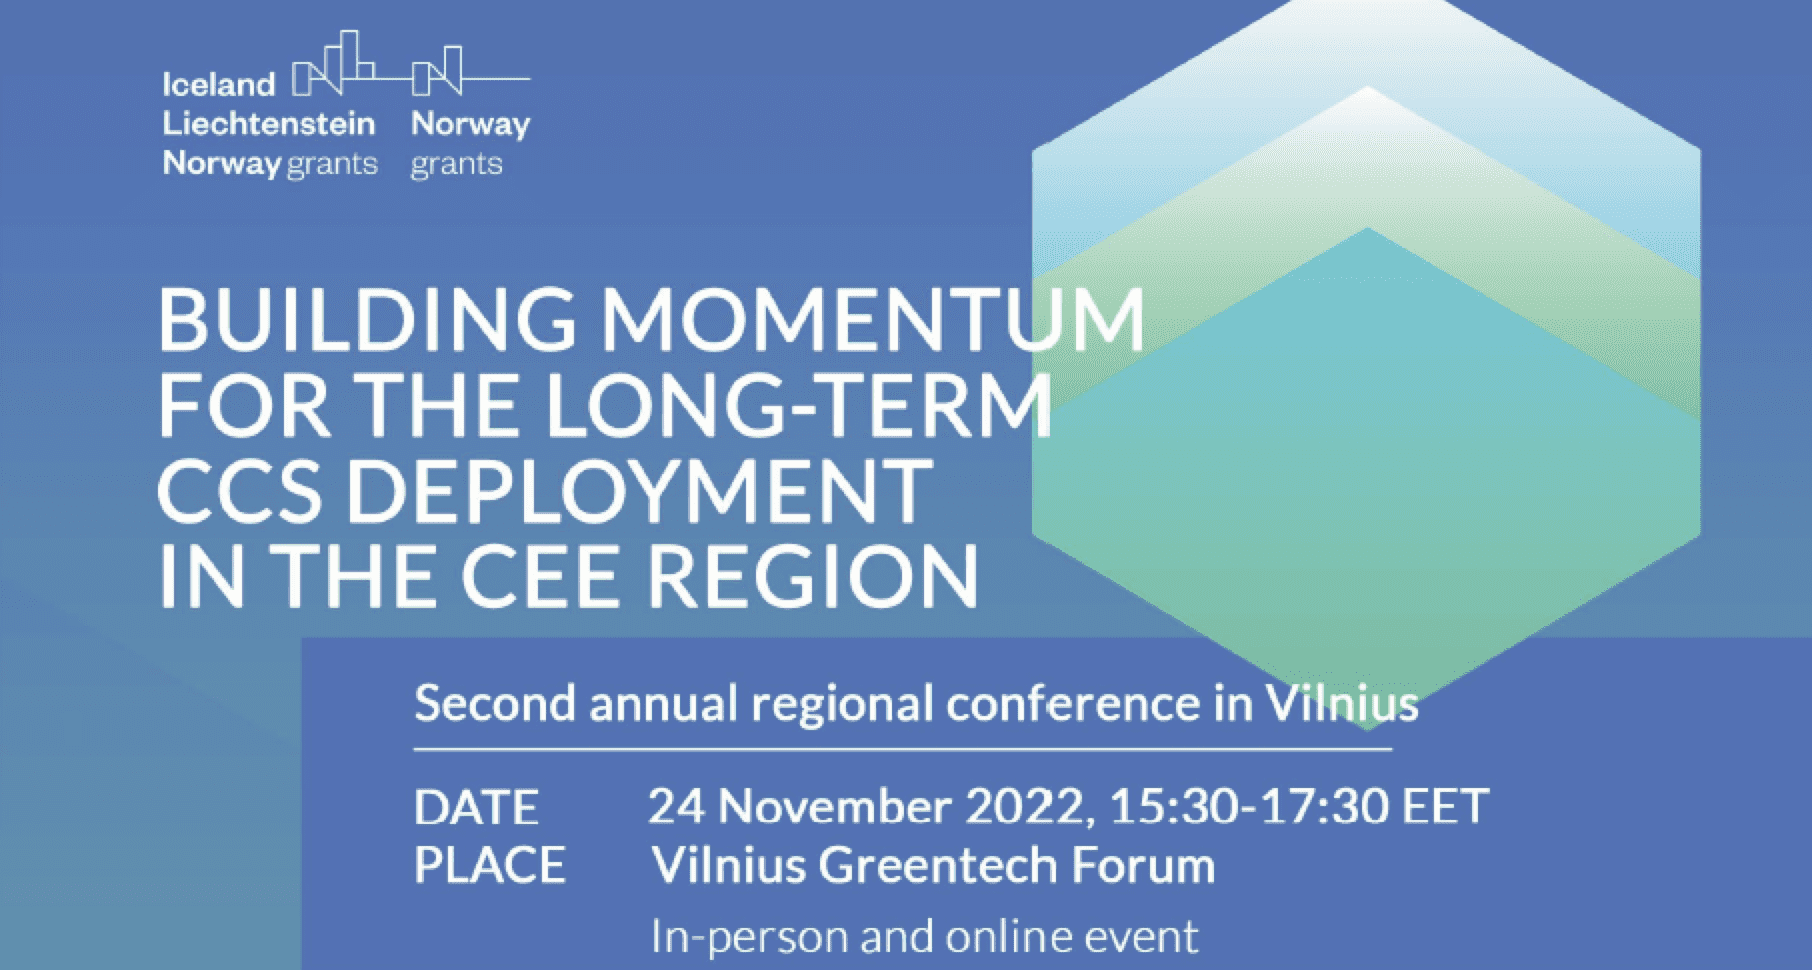 Second annual regional conference in Vilnius